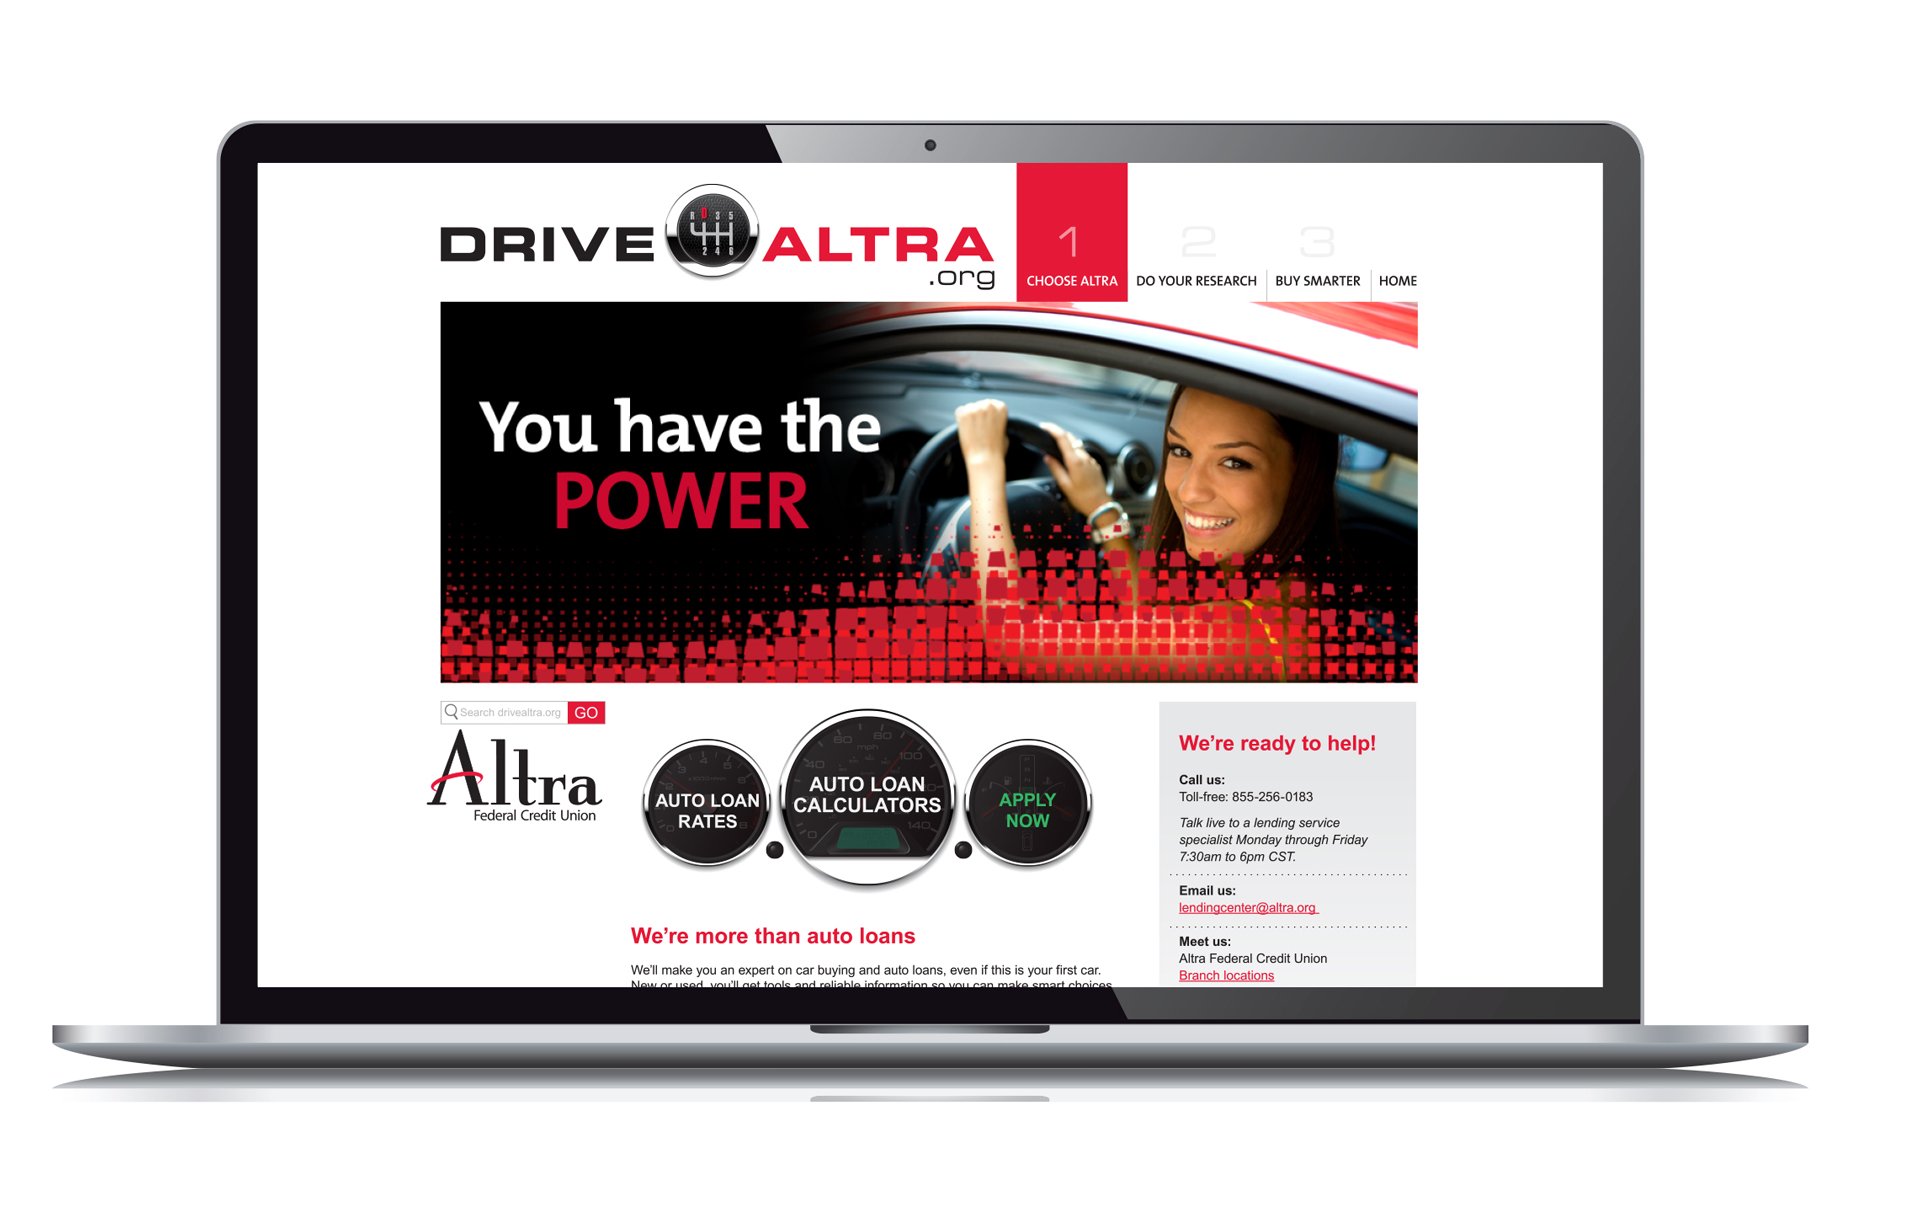 Drive Altra website